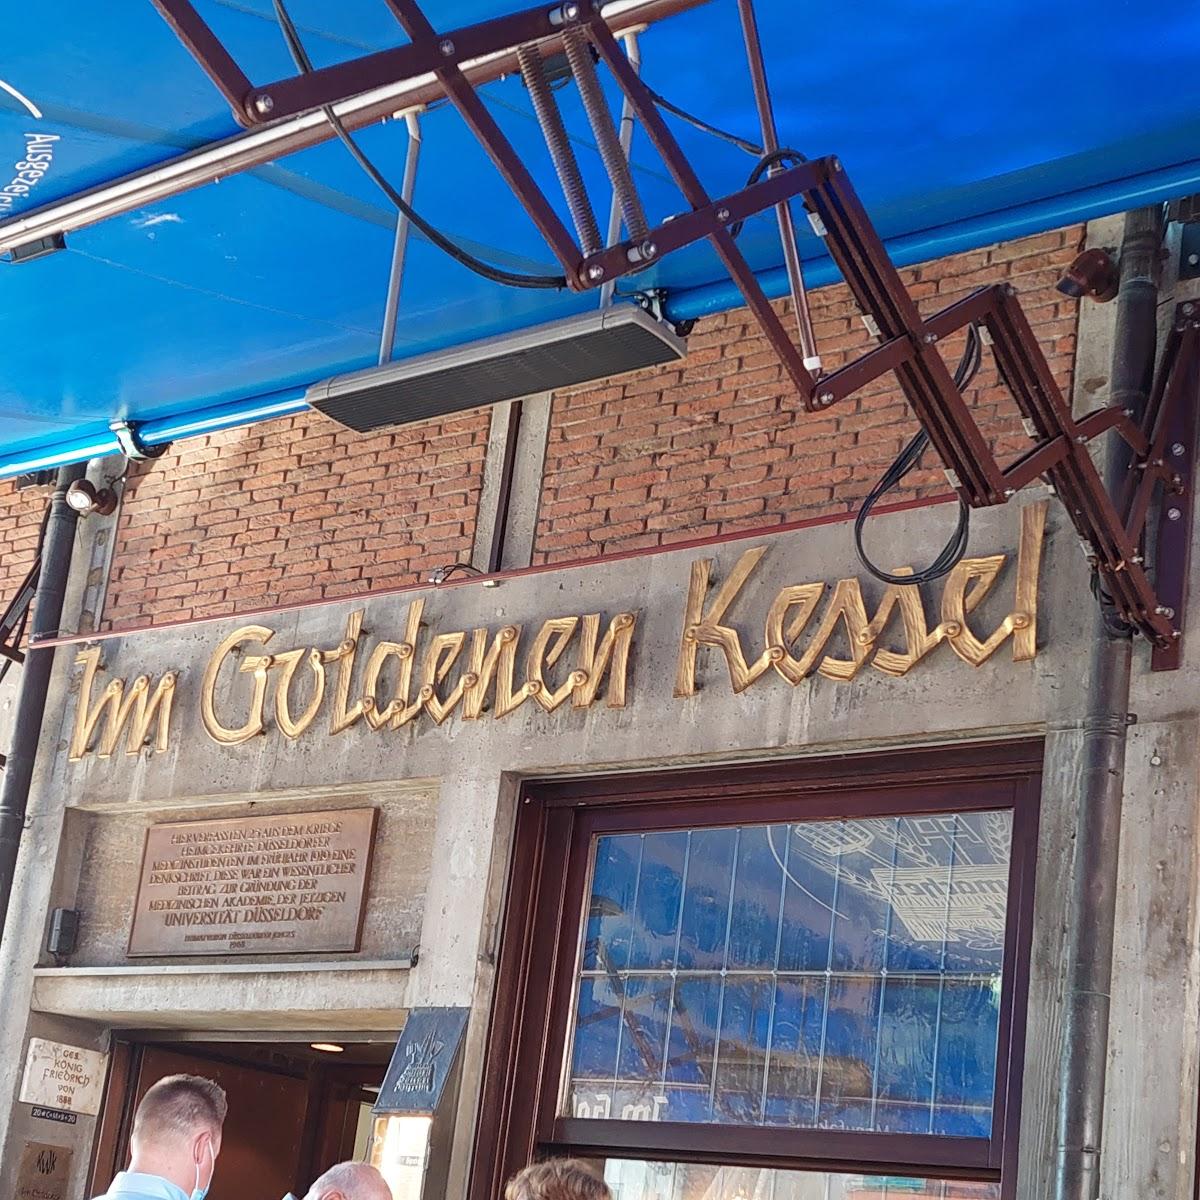 Restaurant "Im Goldenen Kessel" in Düsseldorf